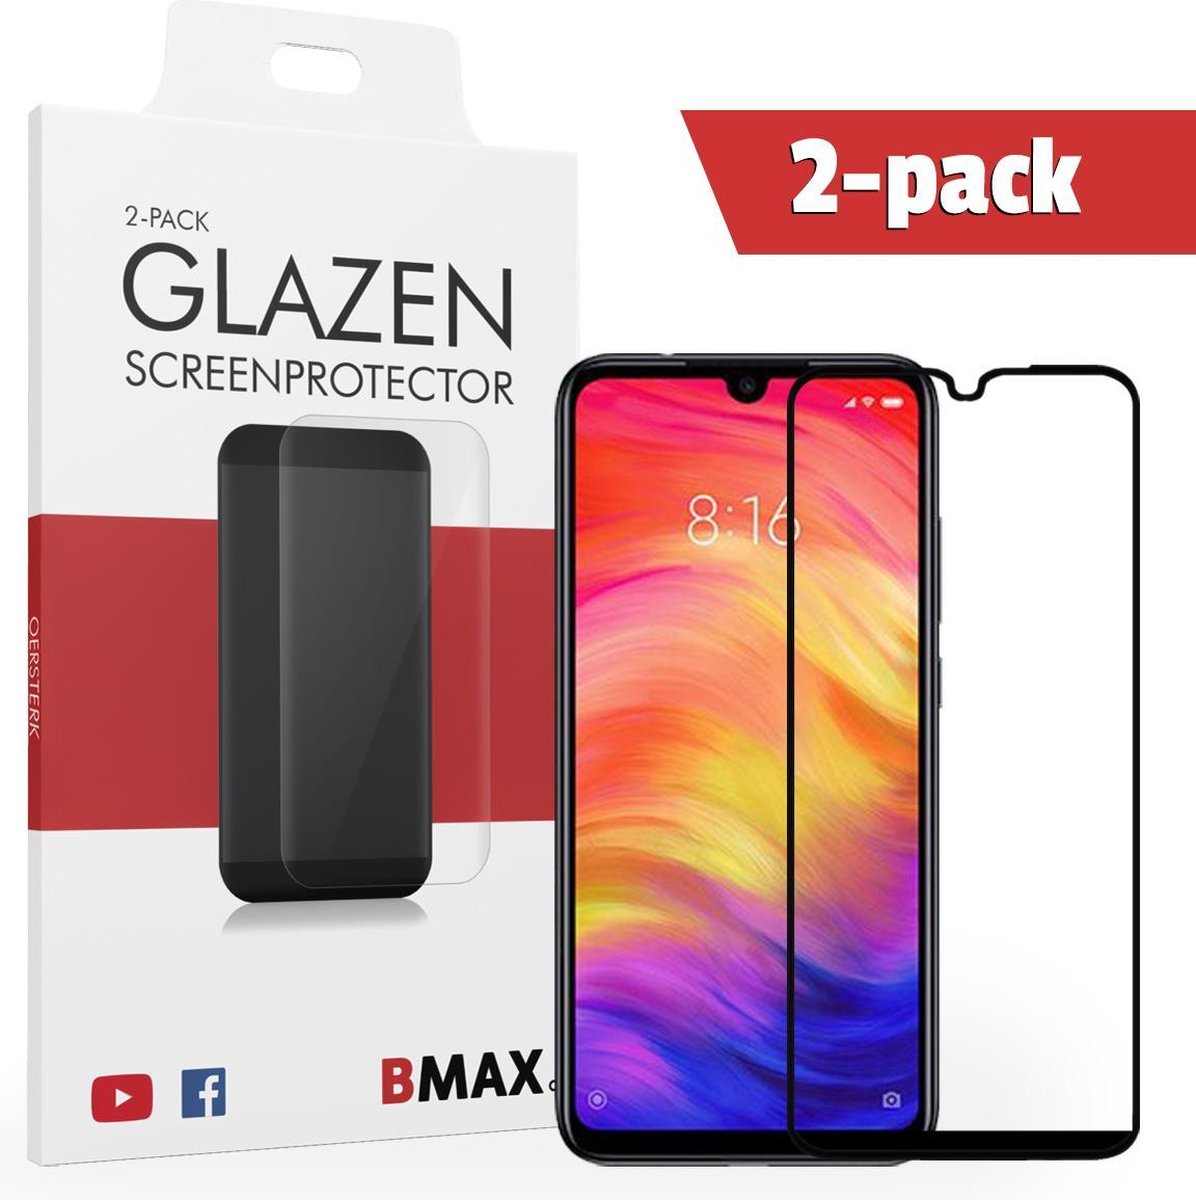 2-pack Bmax Xiaomi Redmi Note 7 Screenprotector - Glass - Full Cover 2.5d - Black